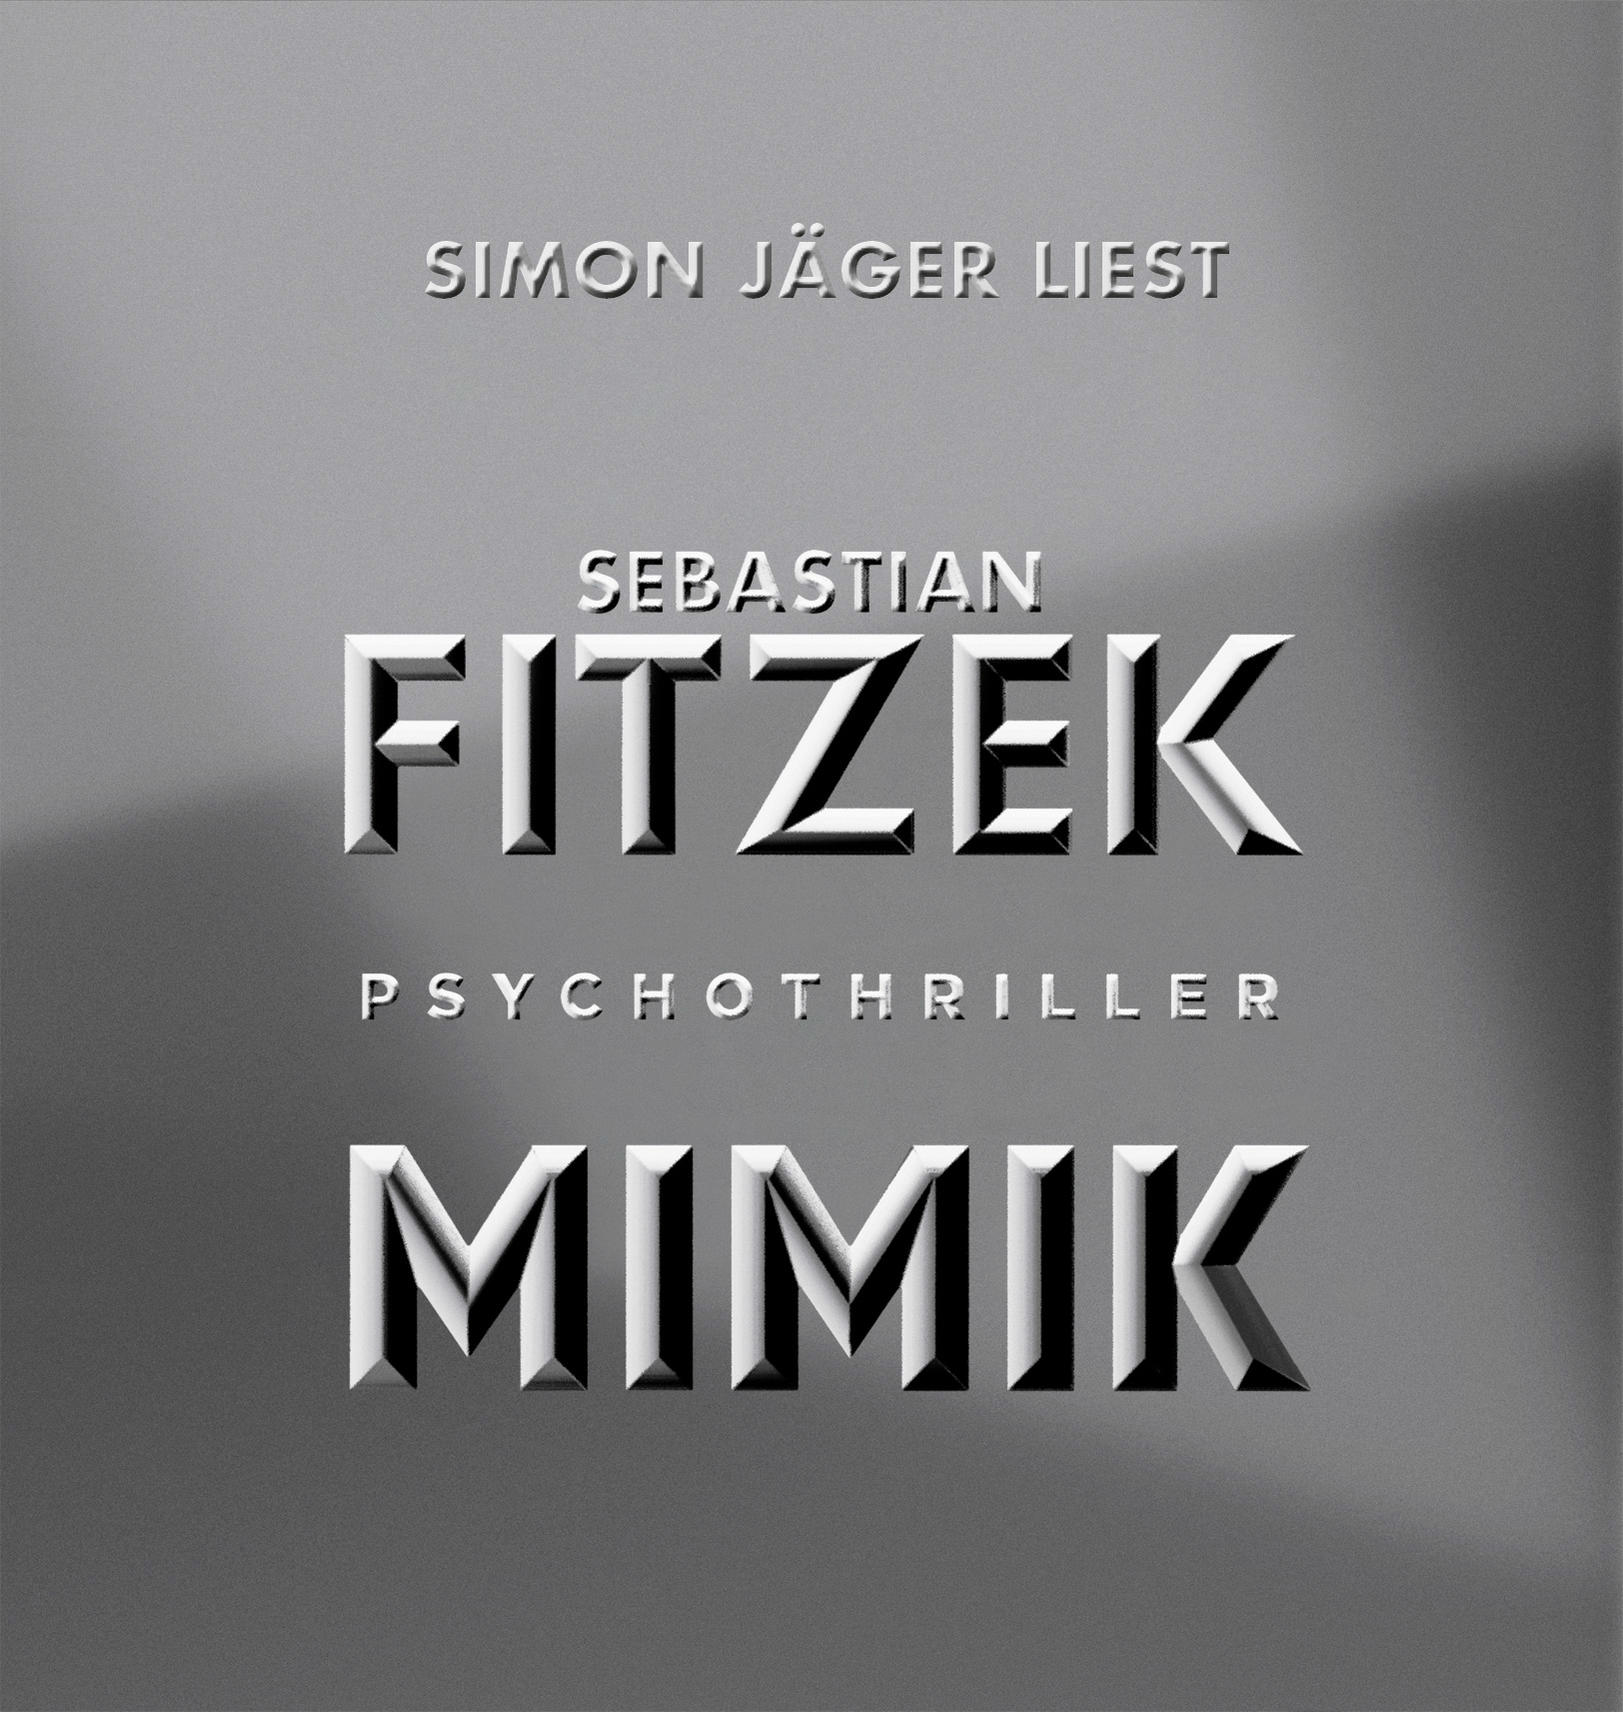 Mimik (MP3-CD) Simon - - Jäger